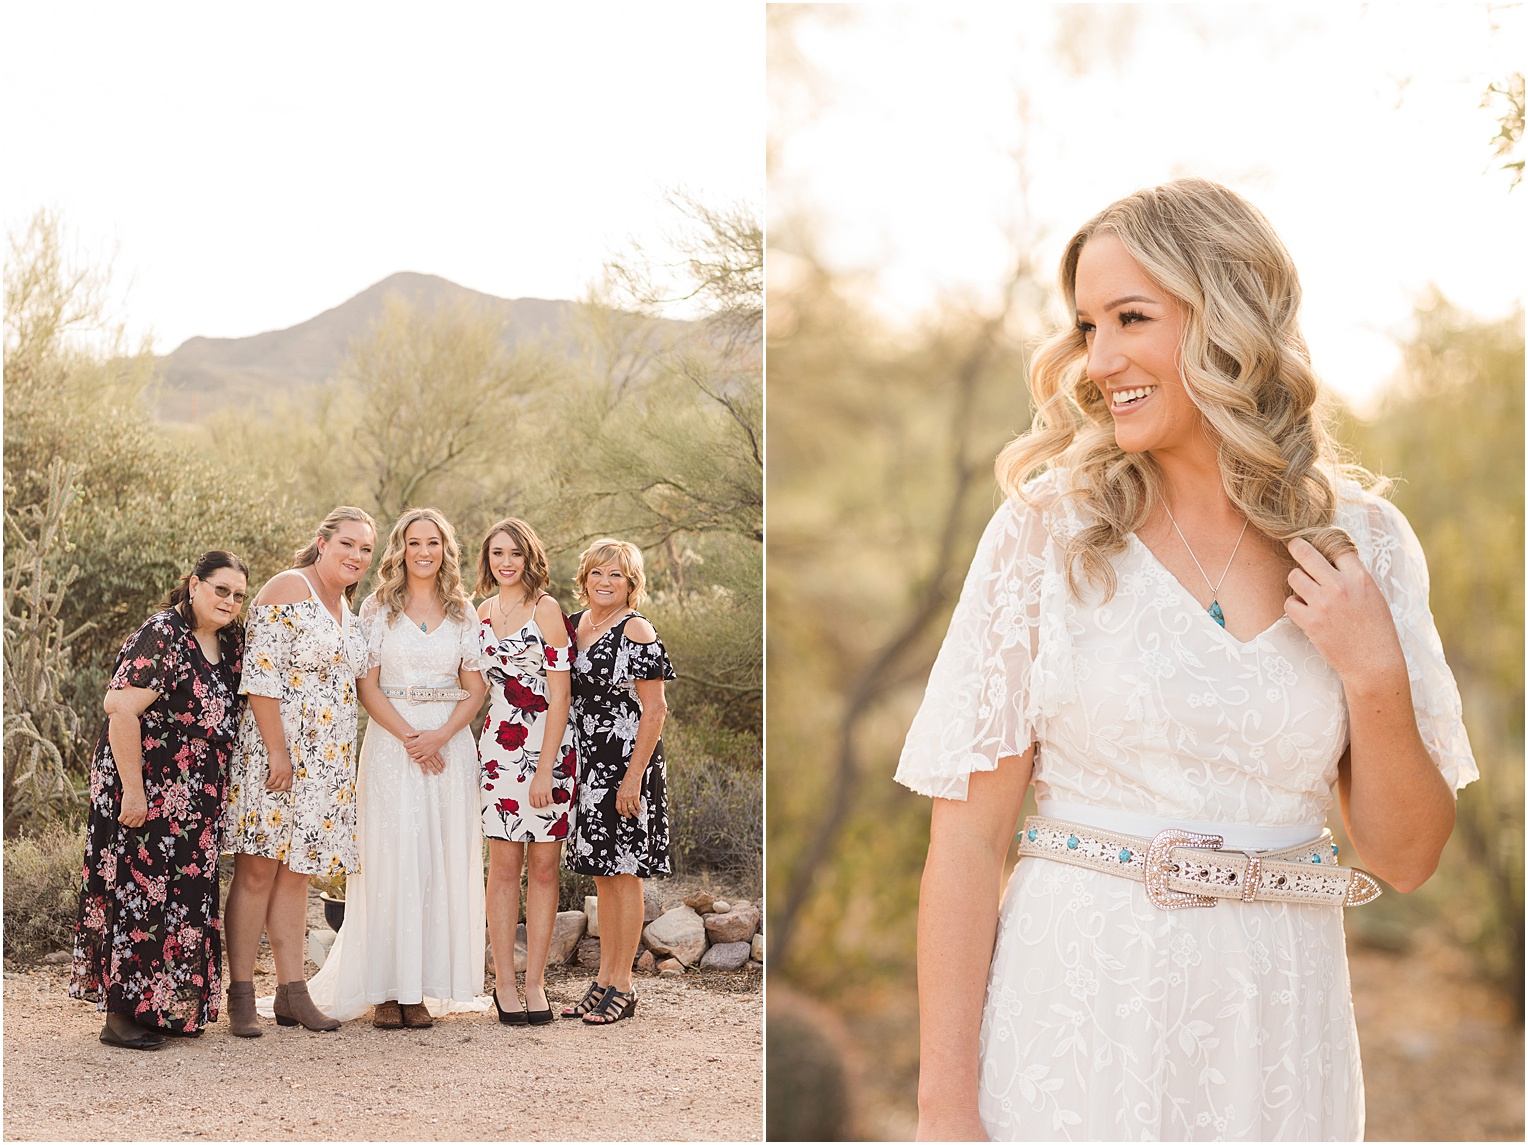 Gates Pass Wedding Tucson Arizona Andrea + Cameron bridal portraits